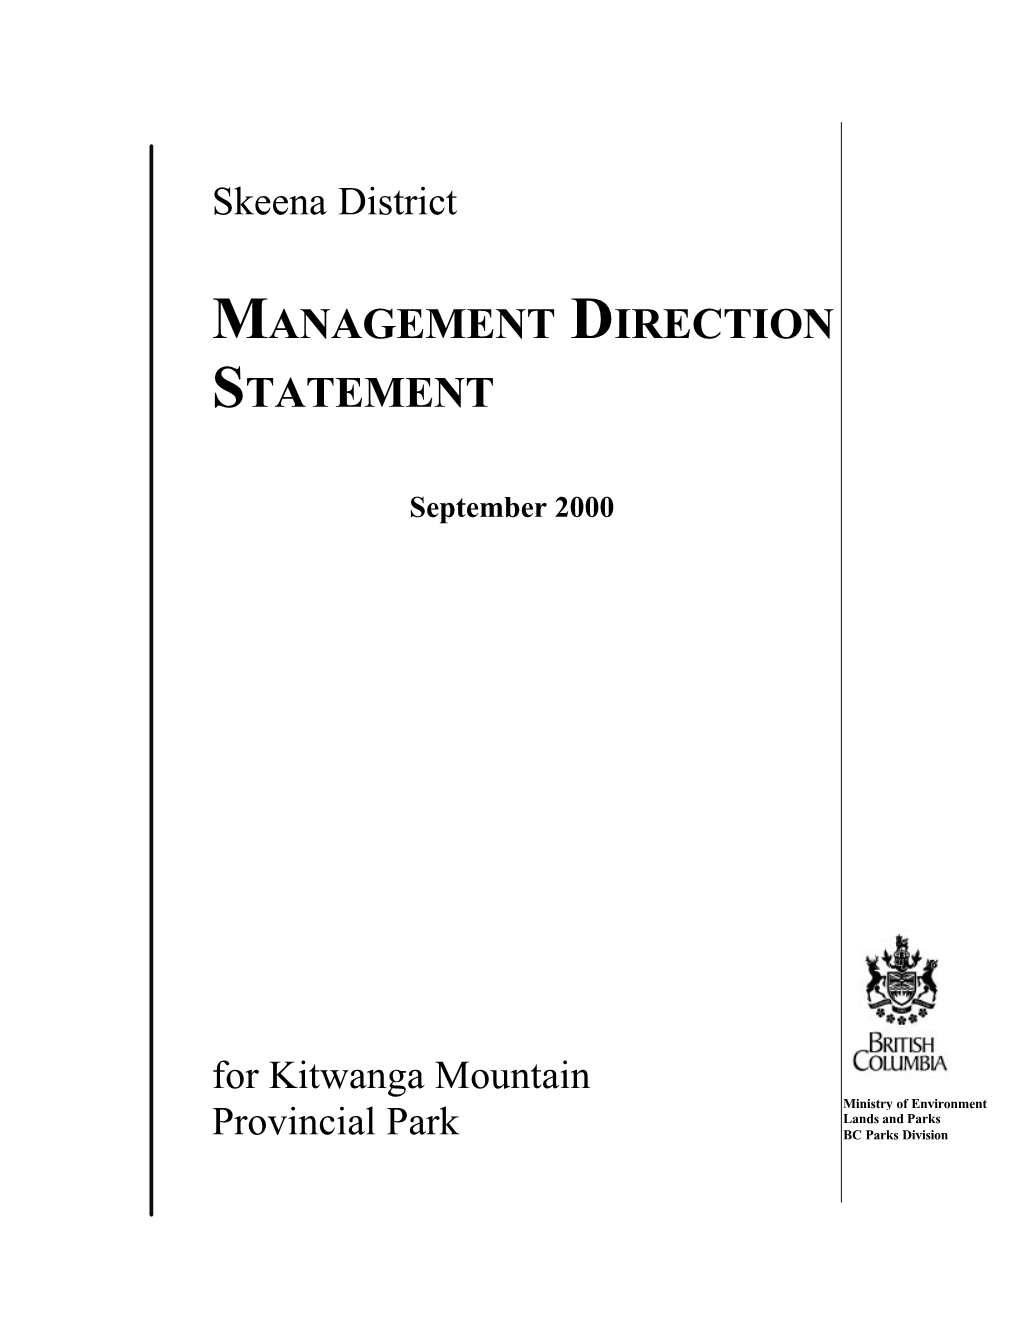 Management Direction Statement